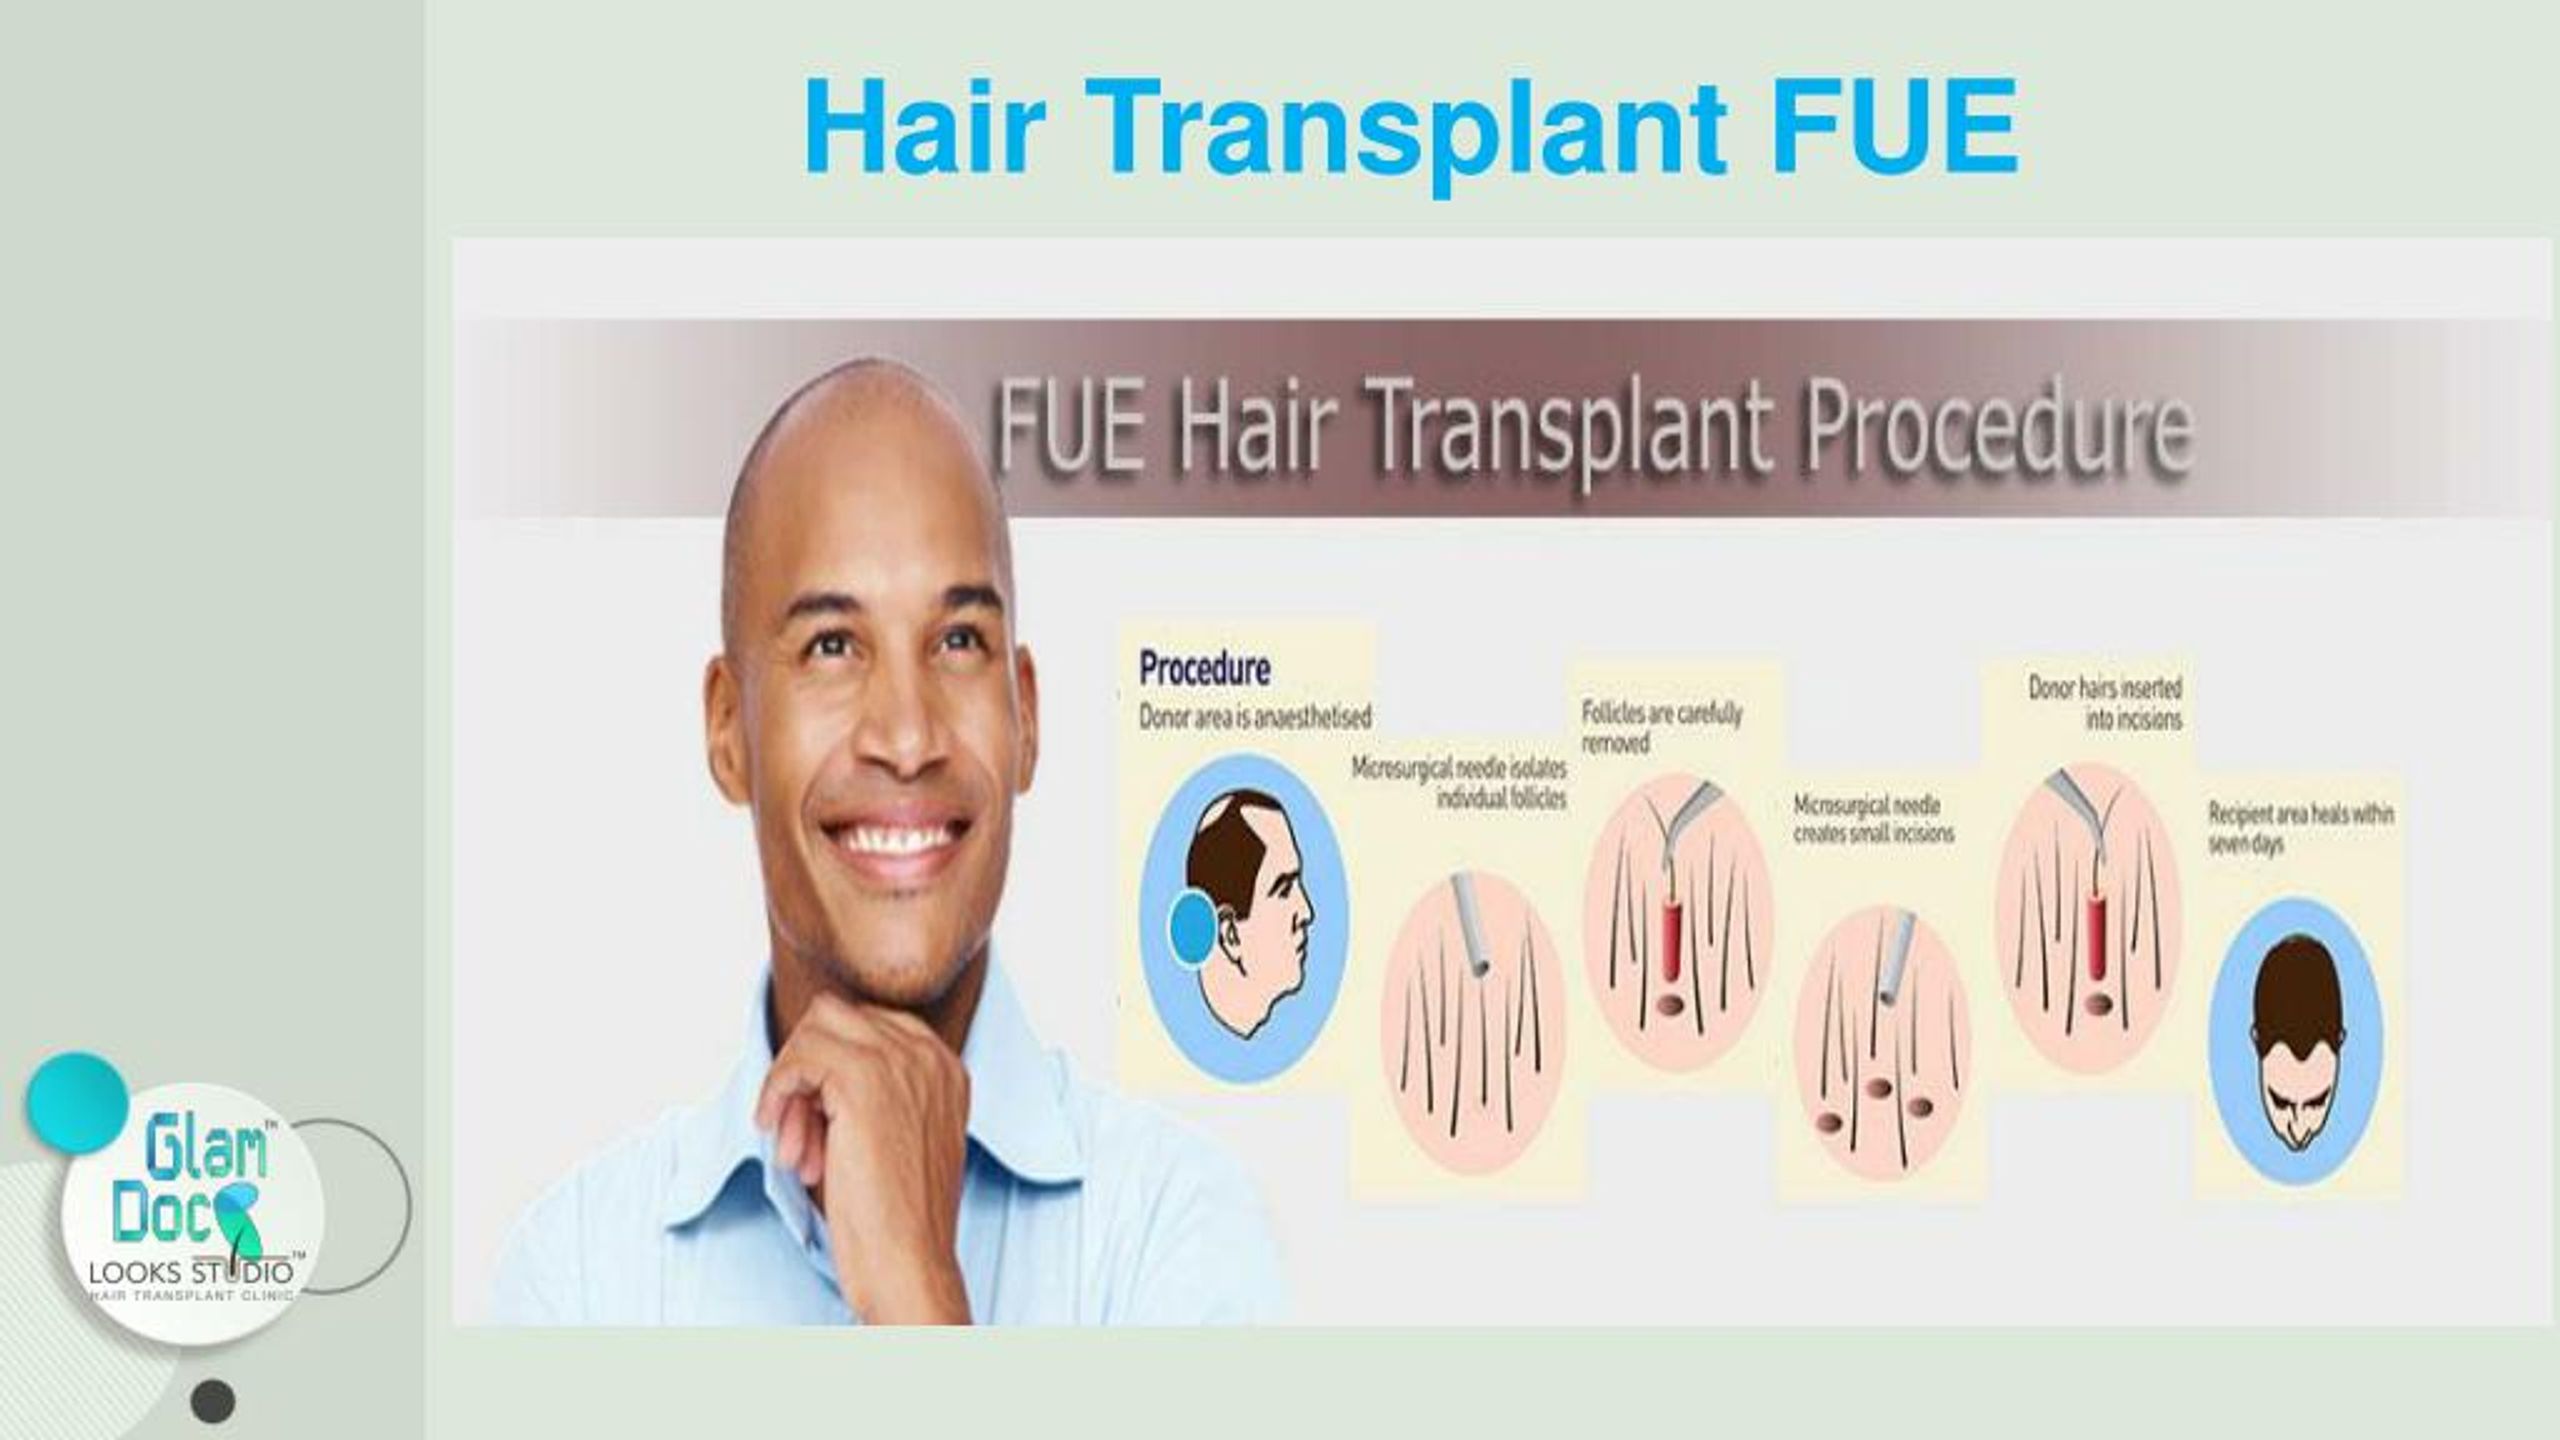 PPT - Glamdoc LOOKSSTUDIO Hair transplant clinic PowerPoint Presentation -  ID:7661718